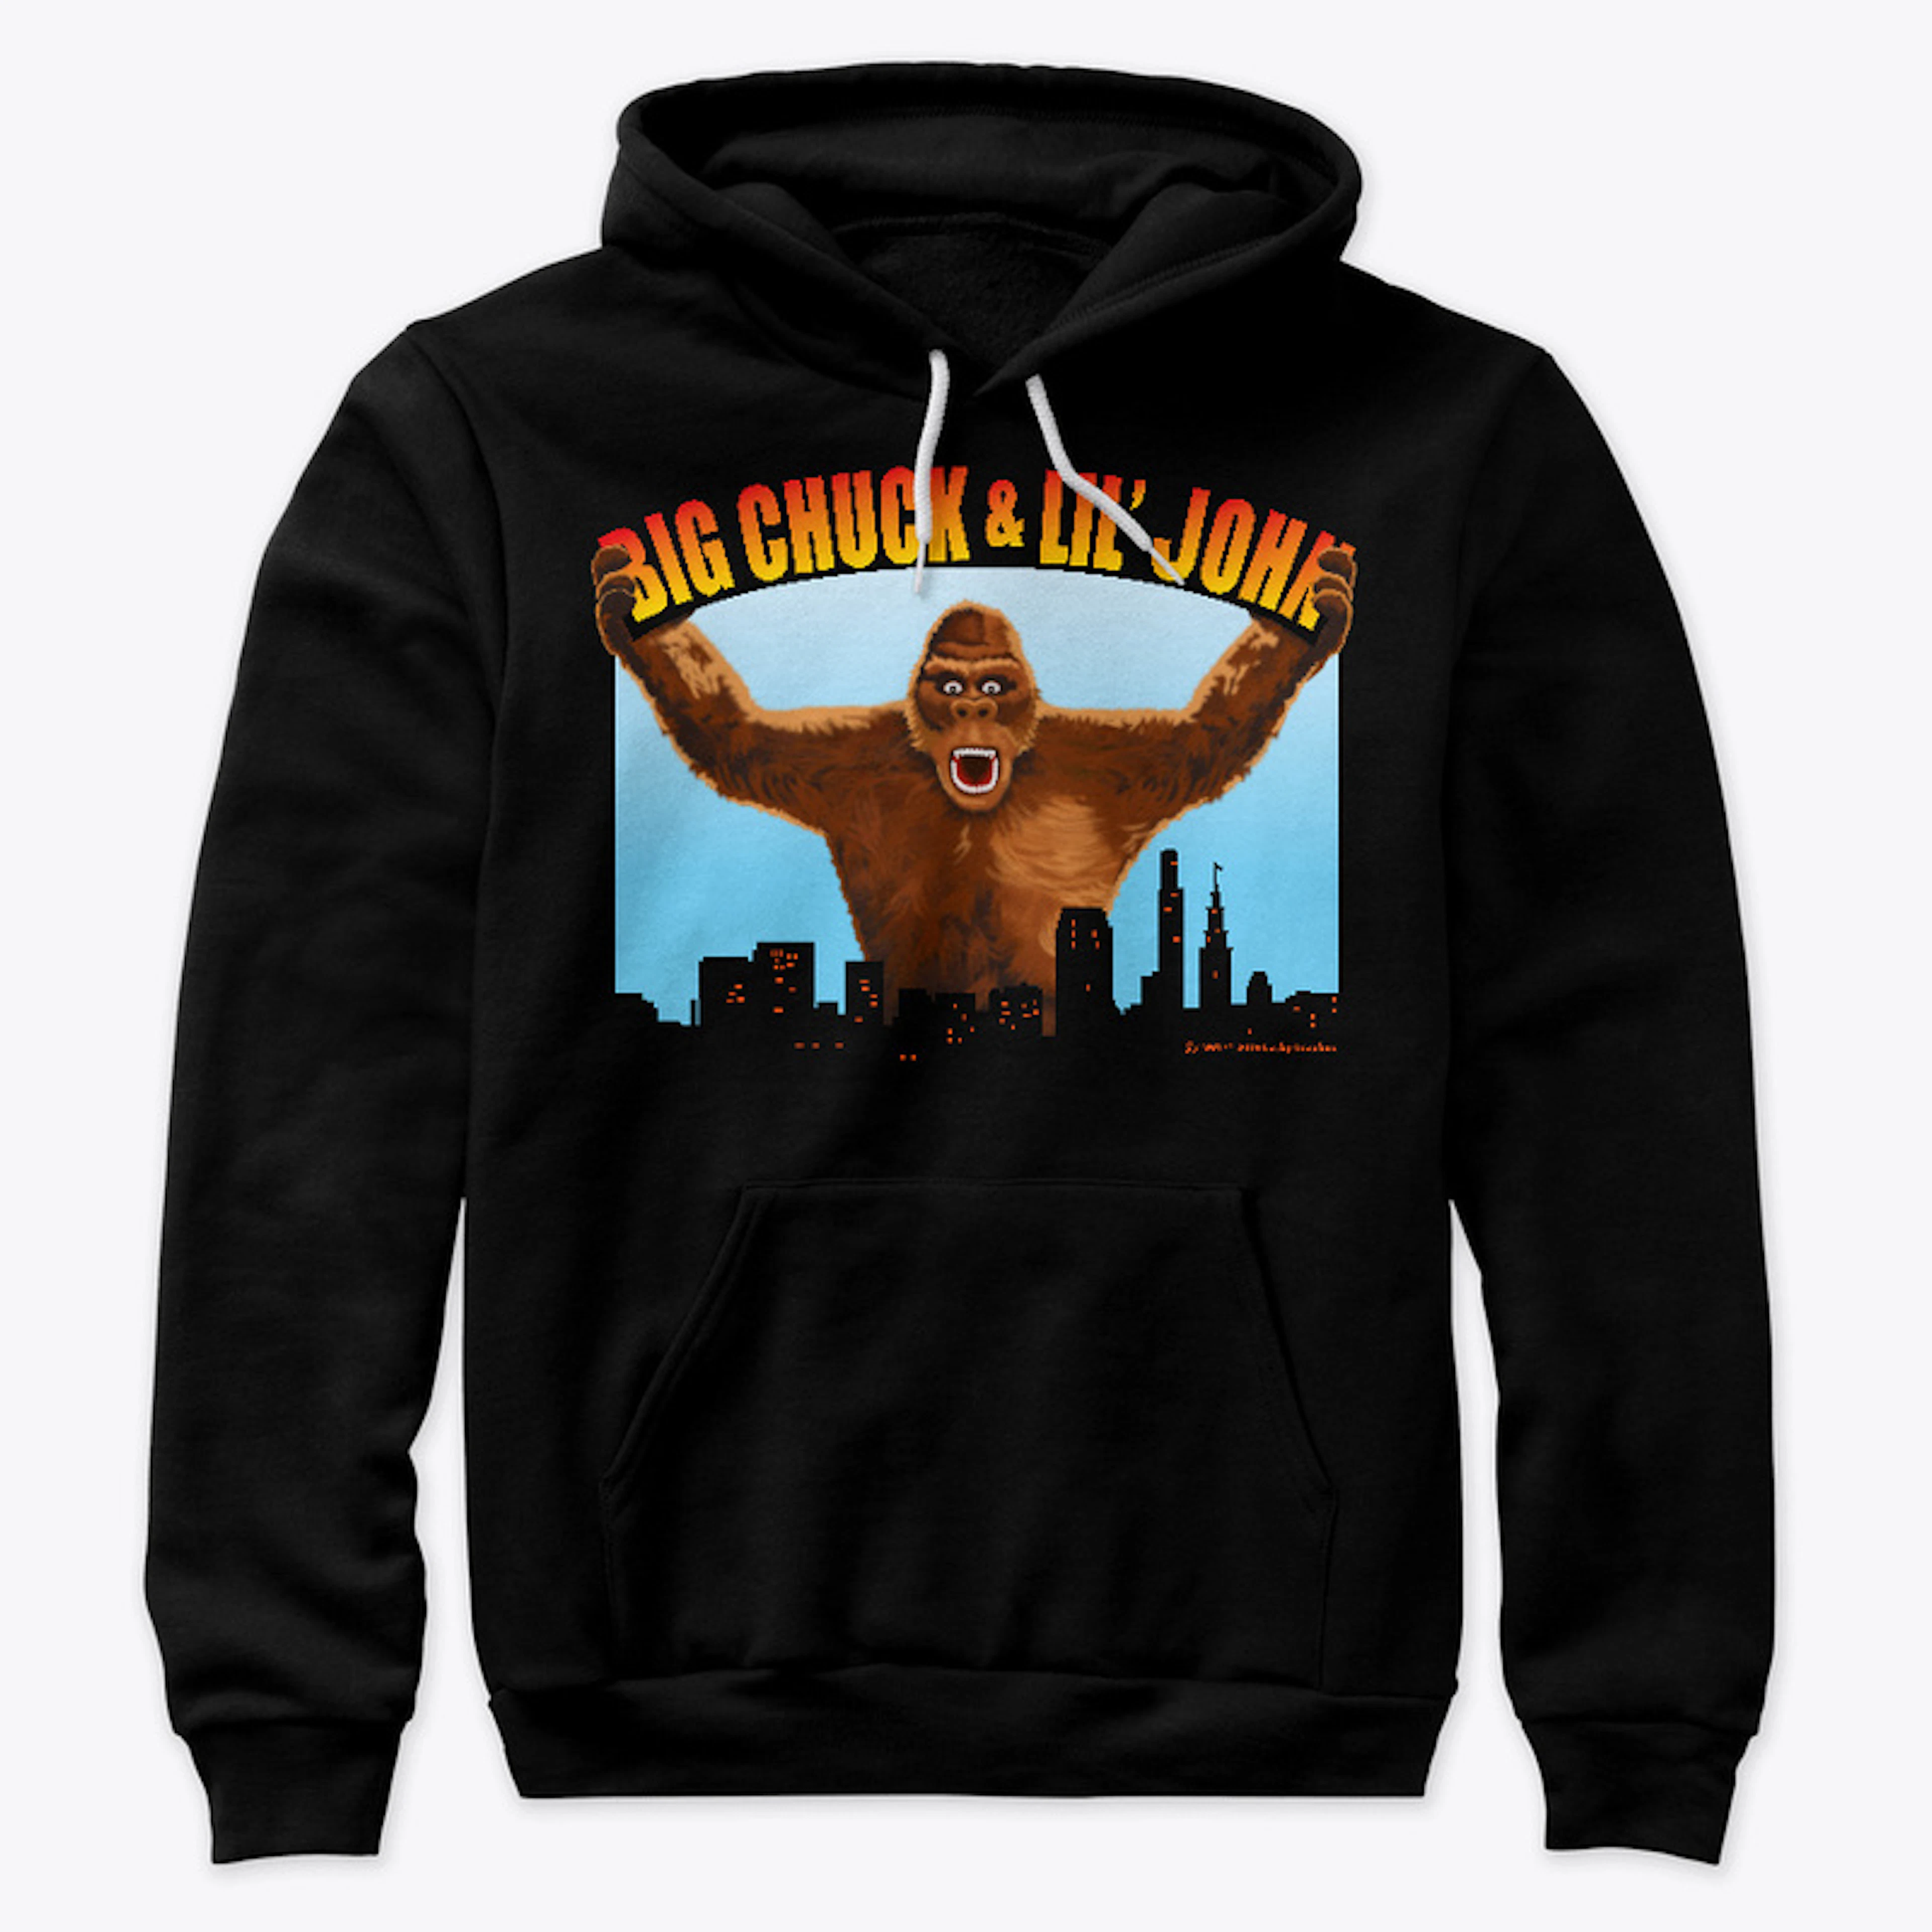 The Official Big Chuck & Lil' John Shirt